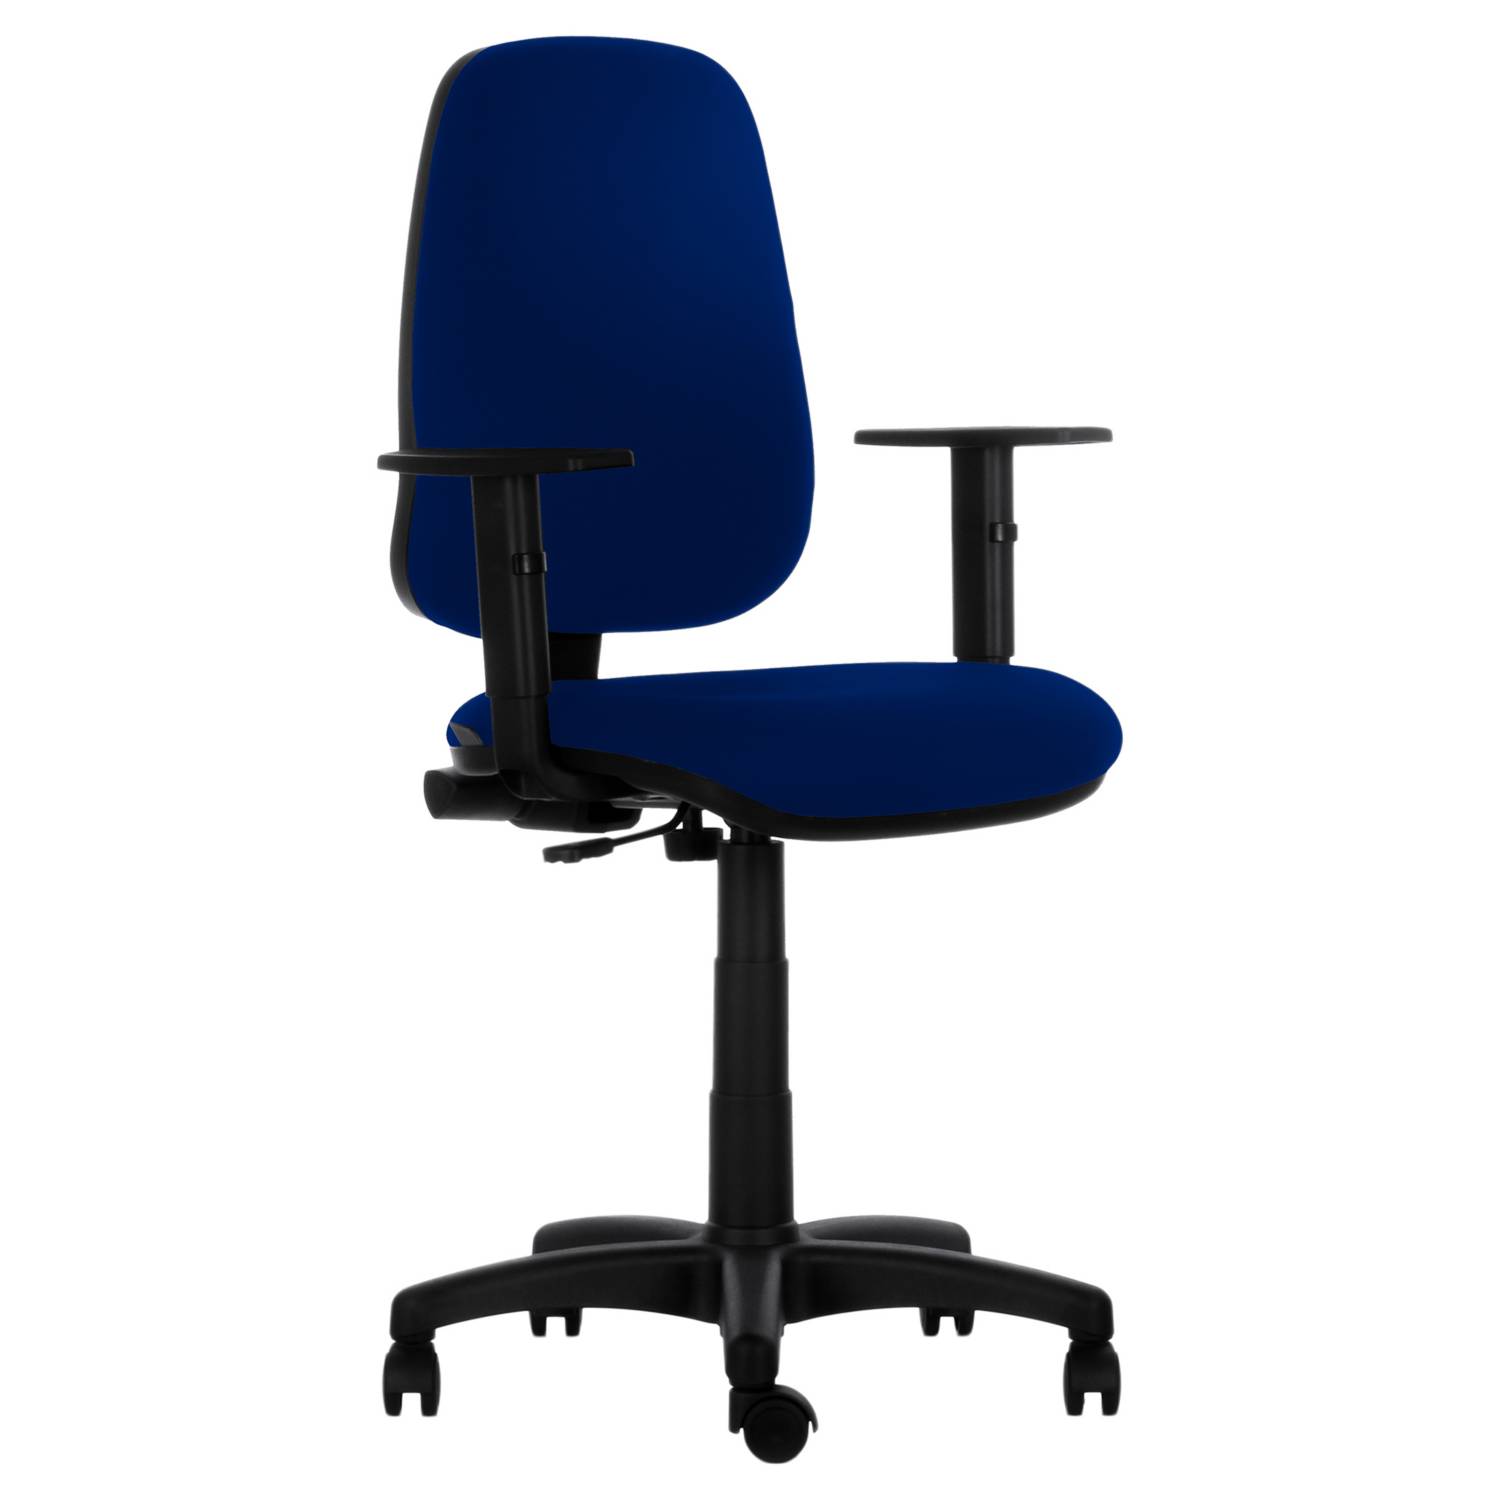 Pack de 4 sillas oficina azul ref: 121 PC